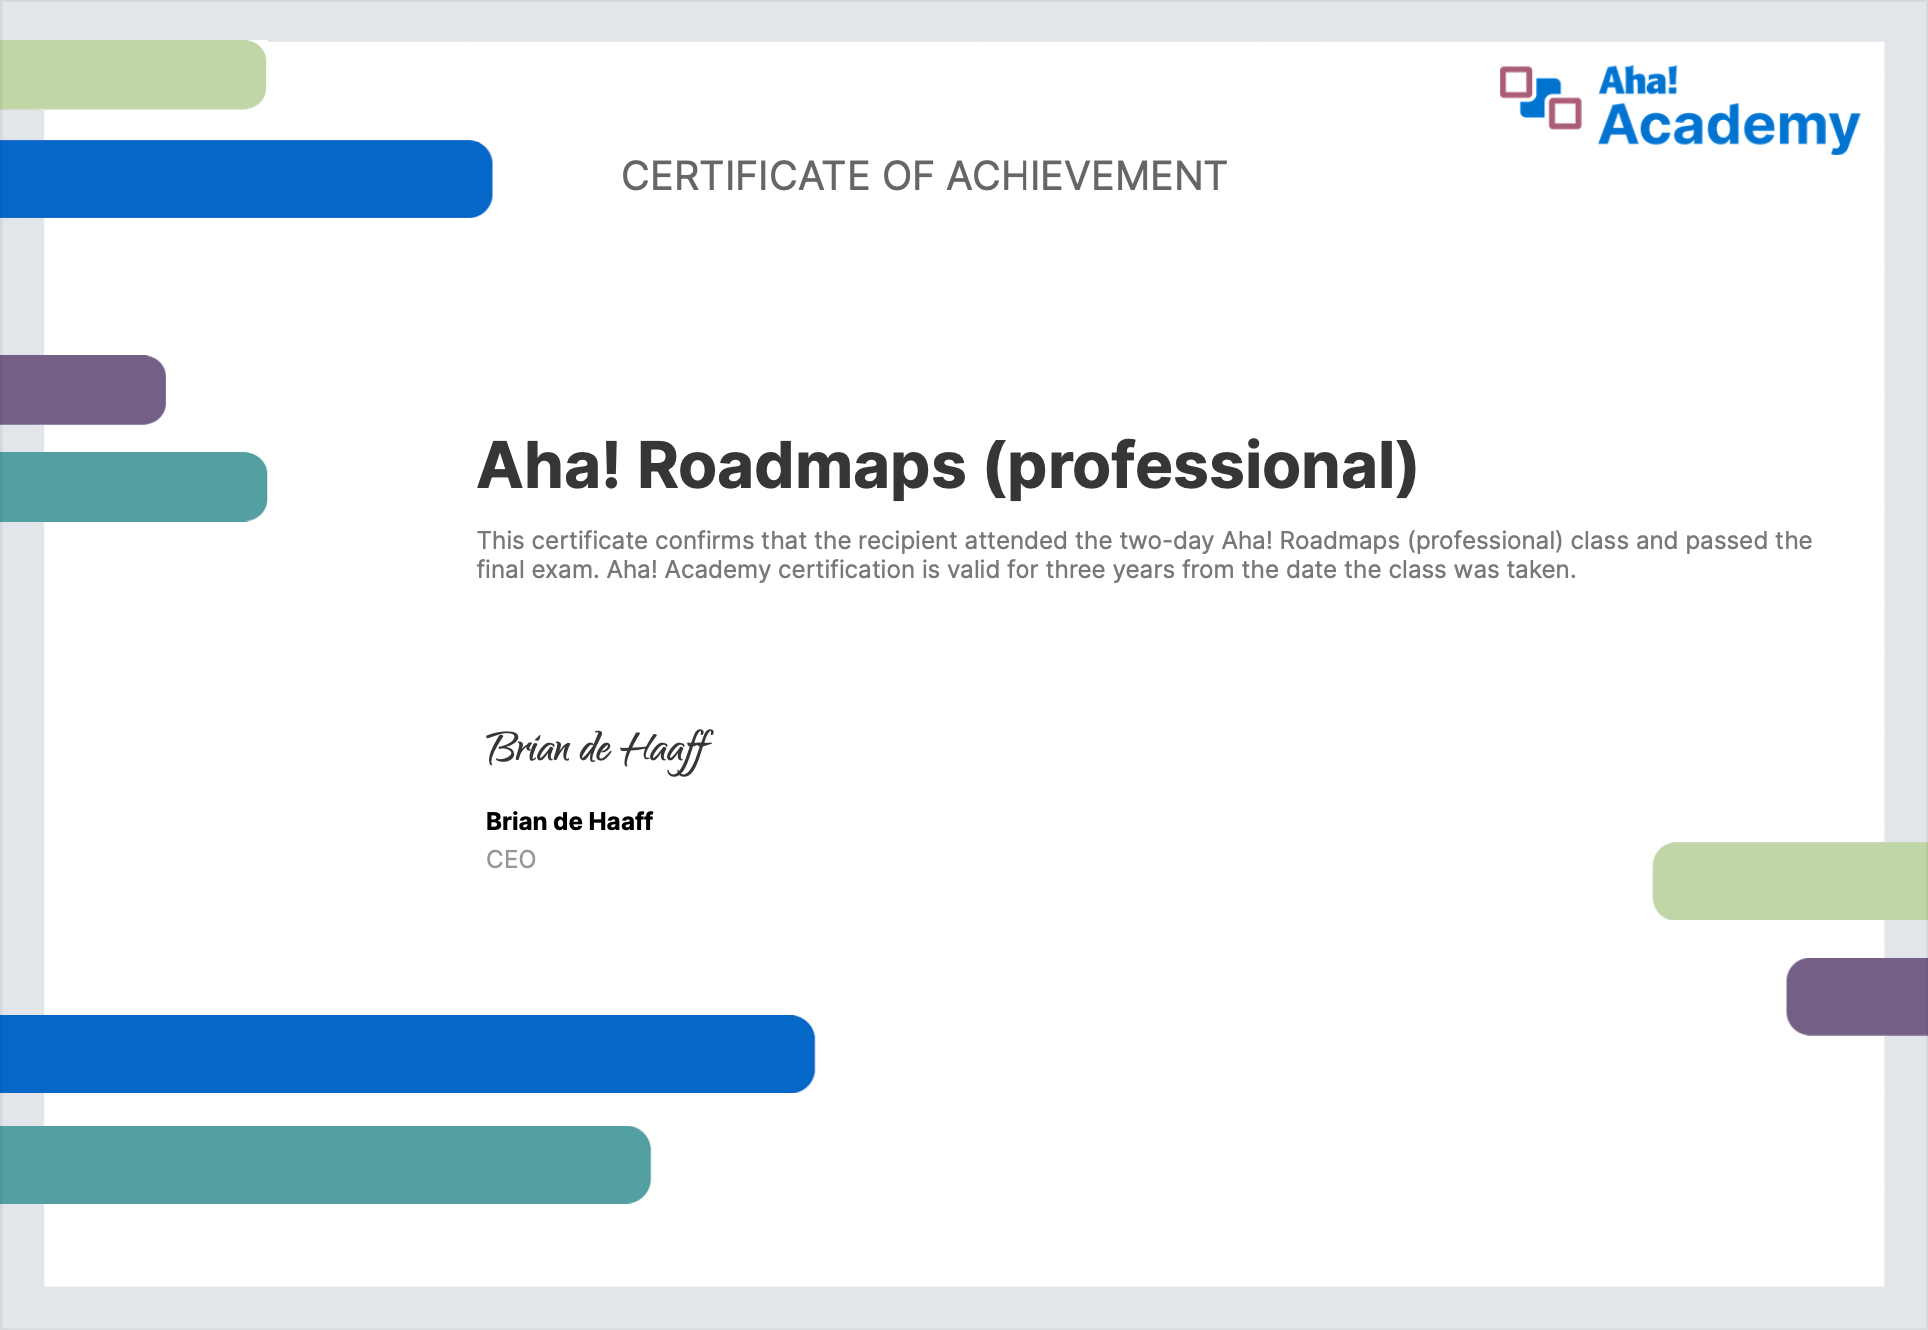 Aha! Roadmaps professional certificate 